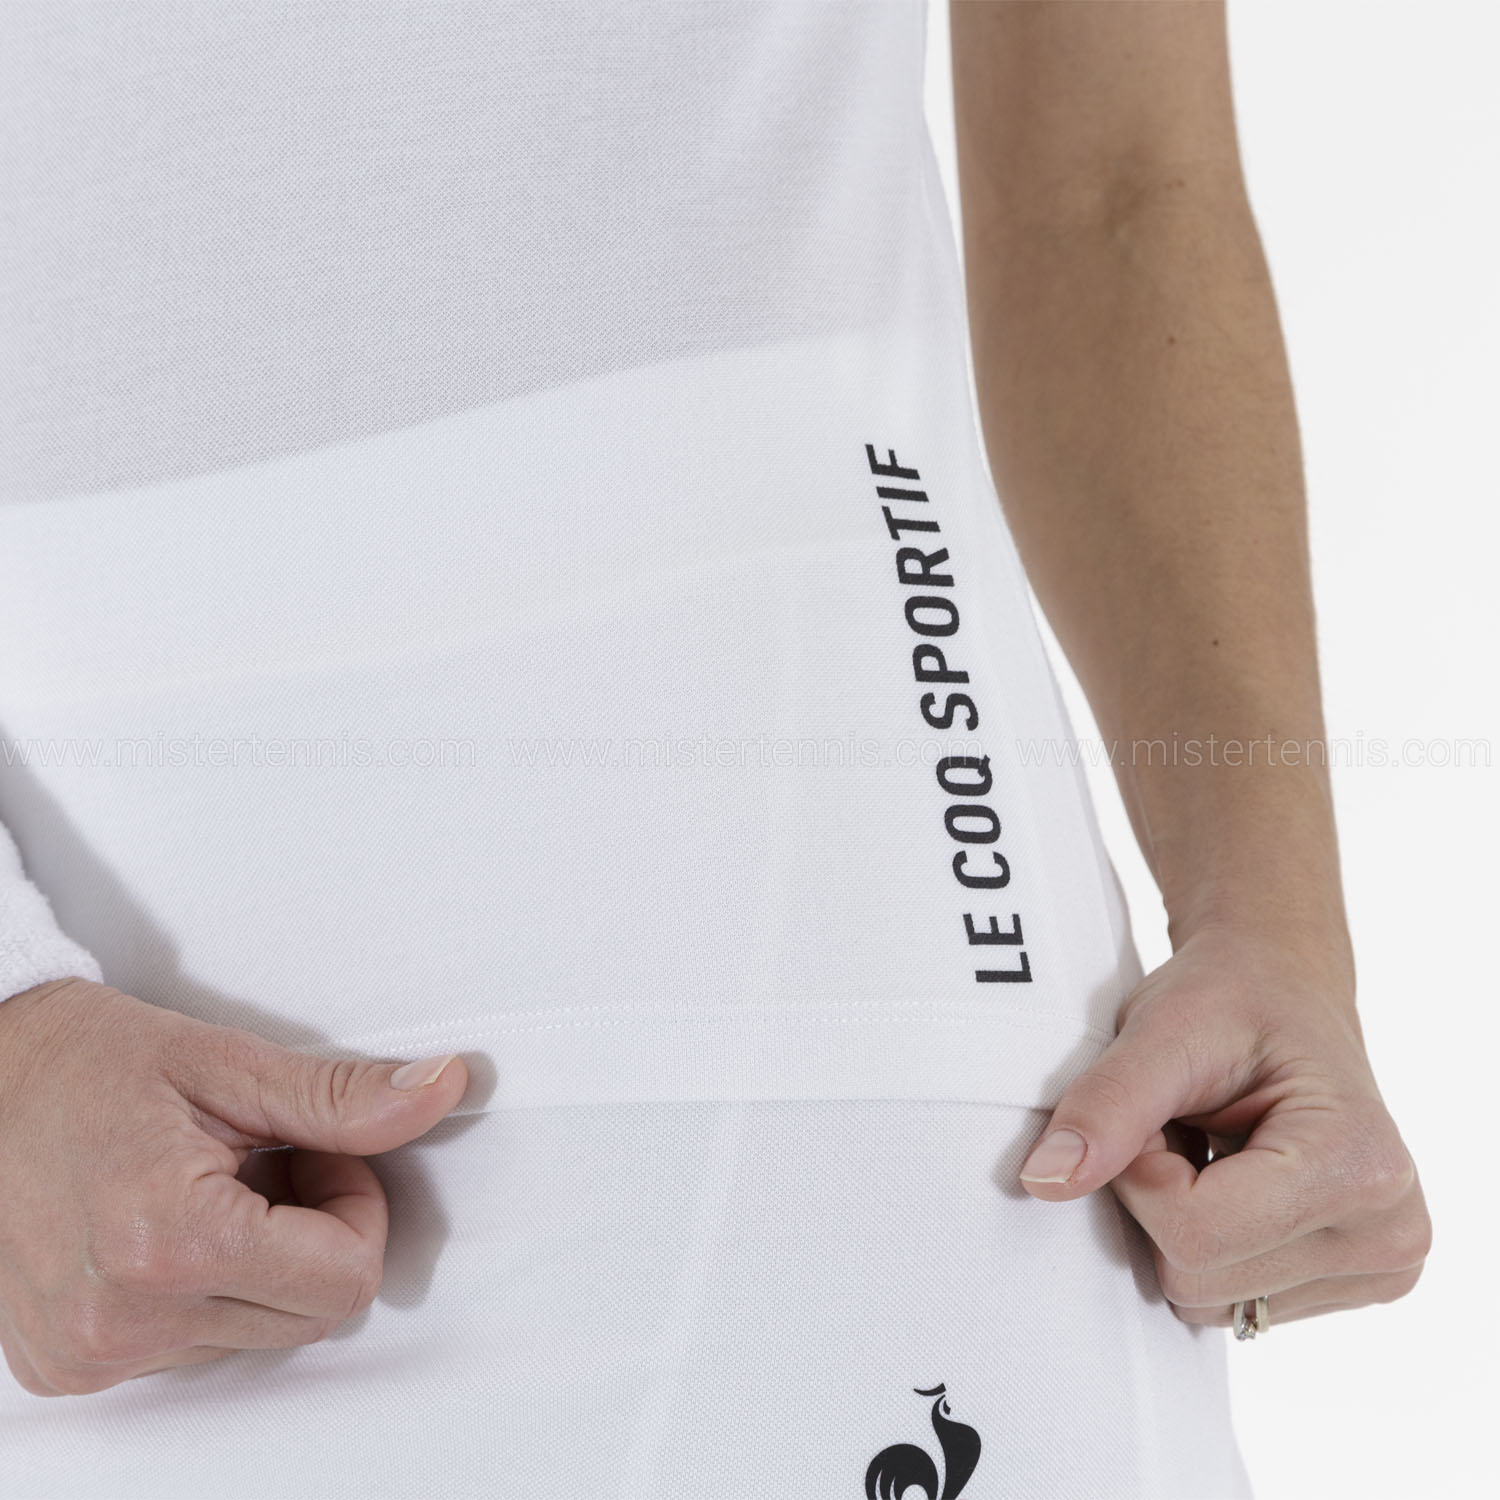 Le Coq Sportif Match Camiseta - New Optical White